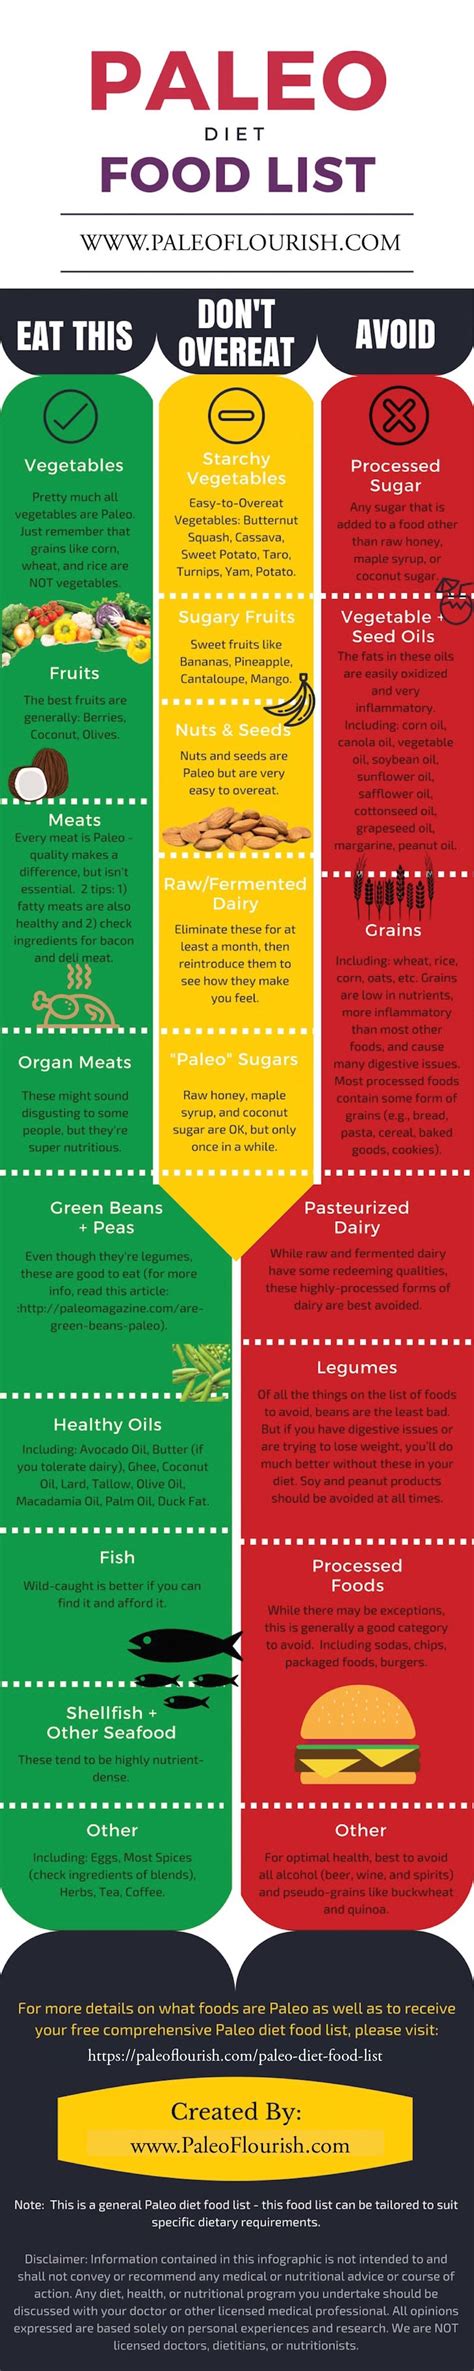 ultimate paleo diet food list infographic